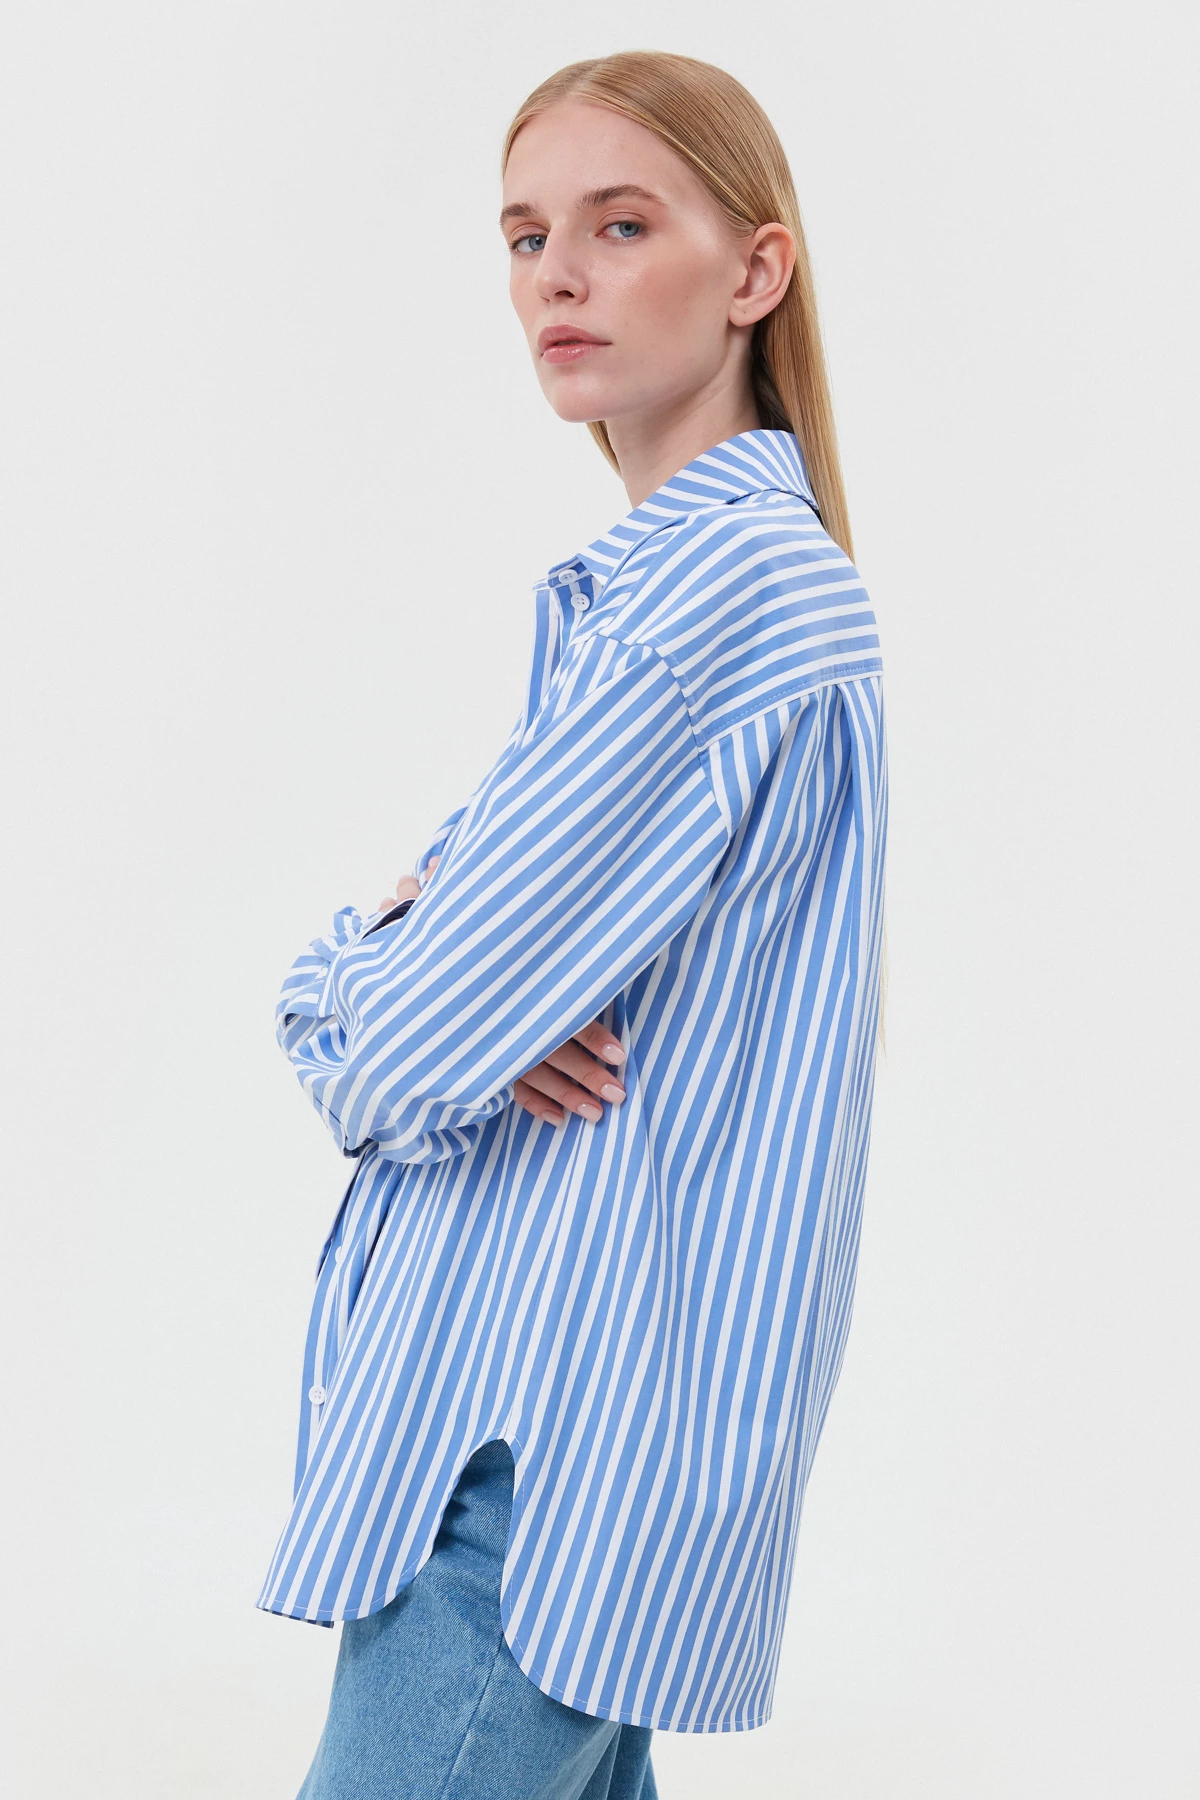 Loose-fit white striped cotton shirt, photo 3